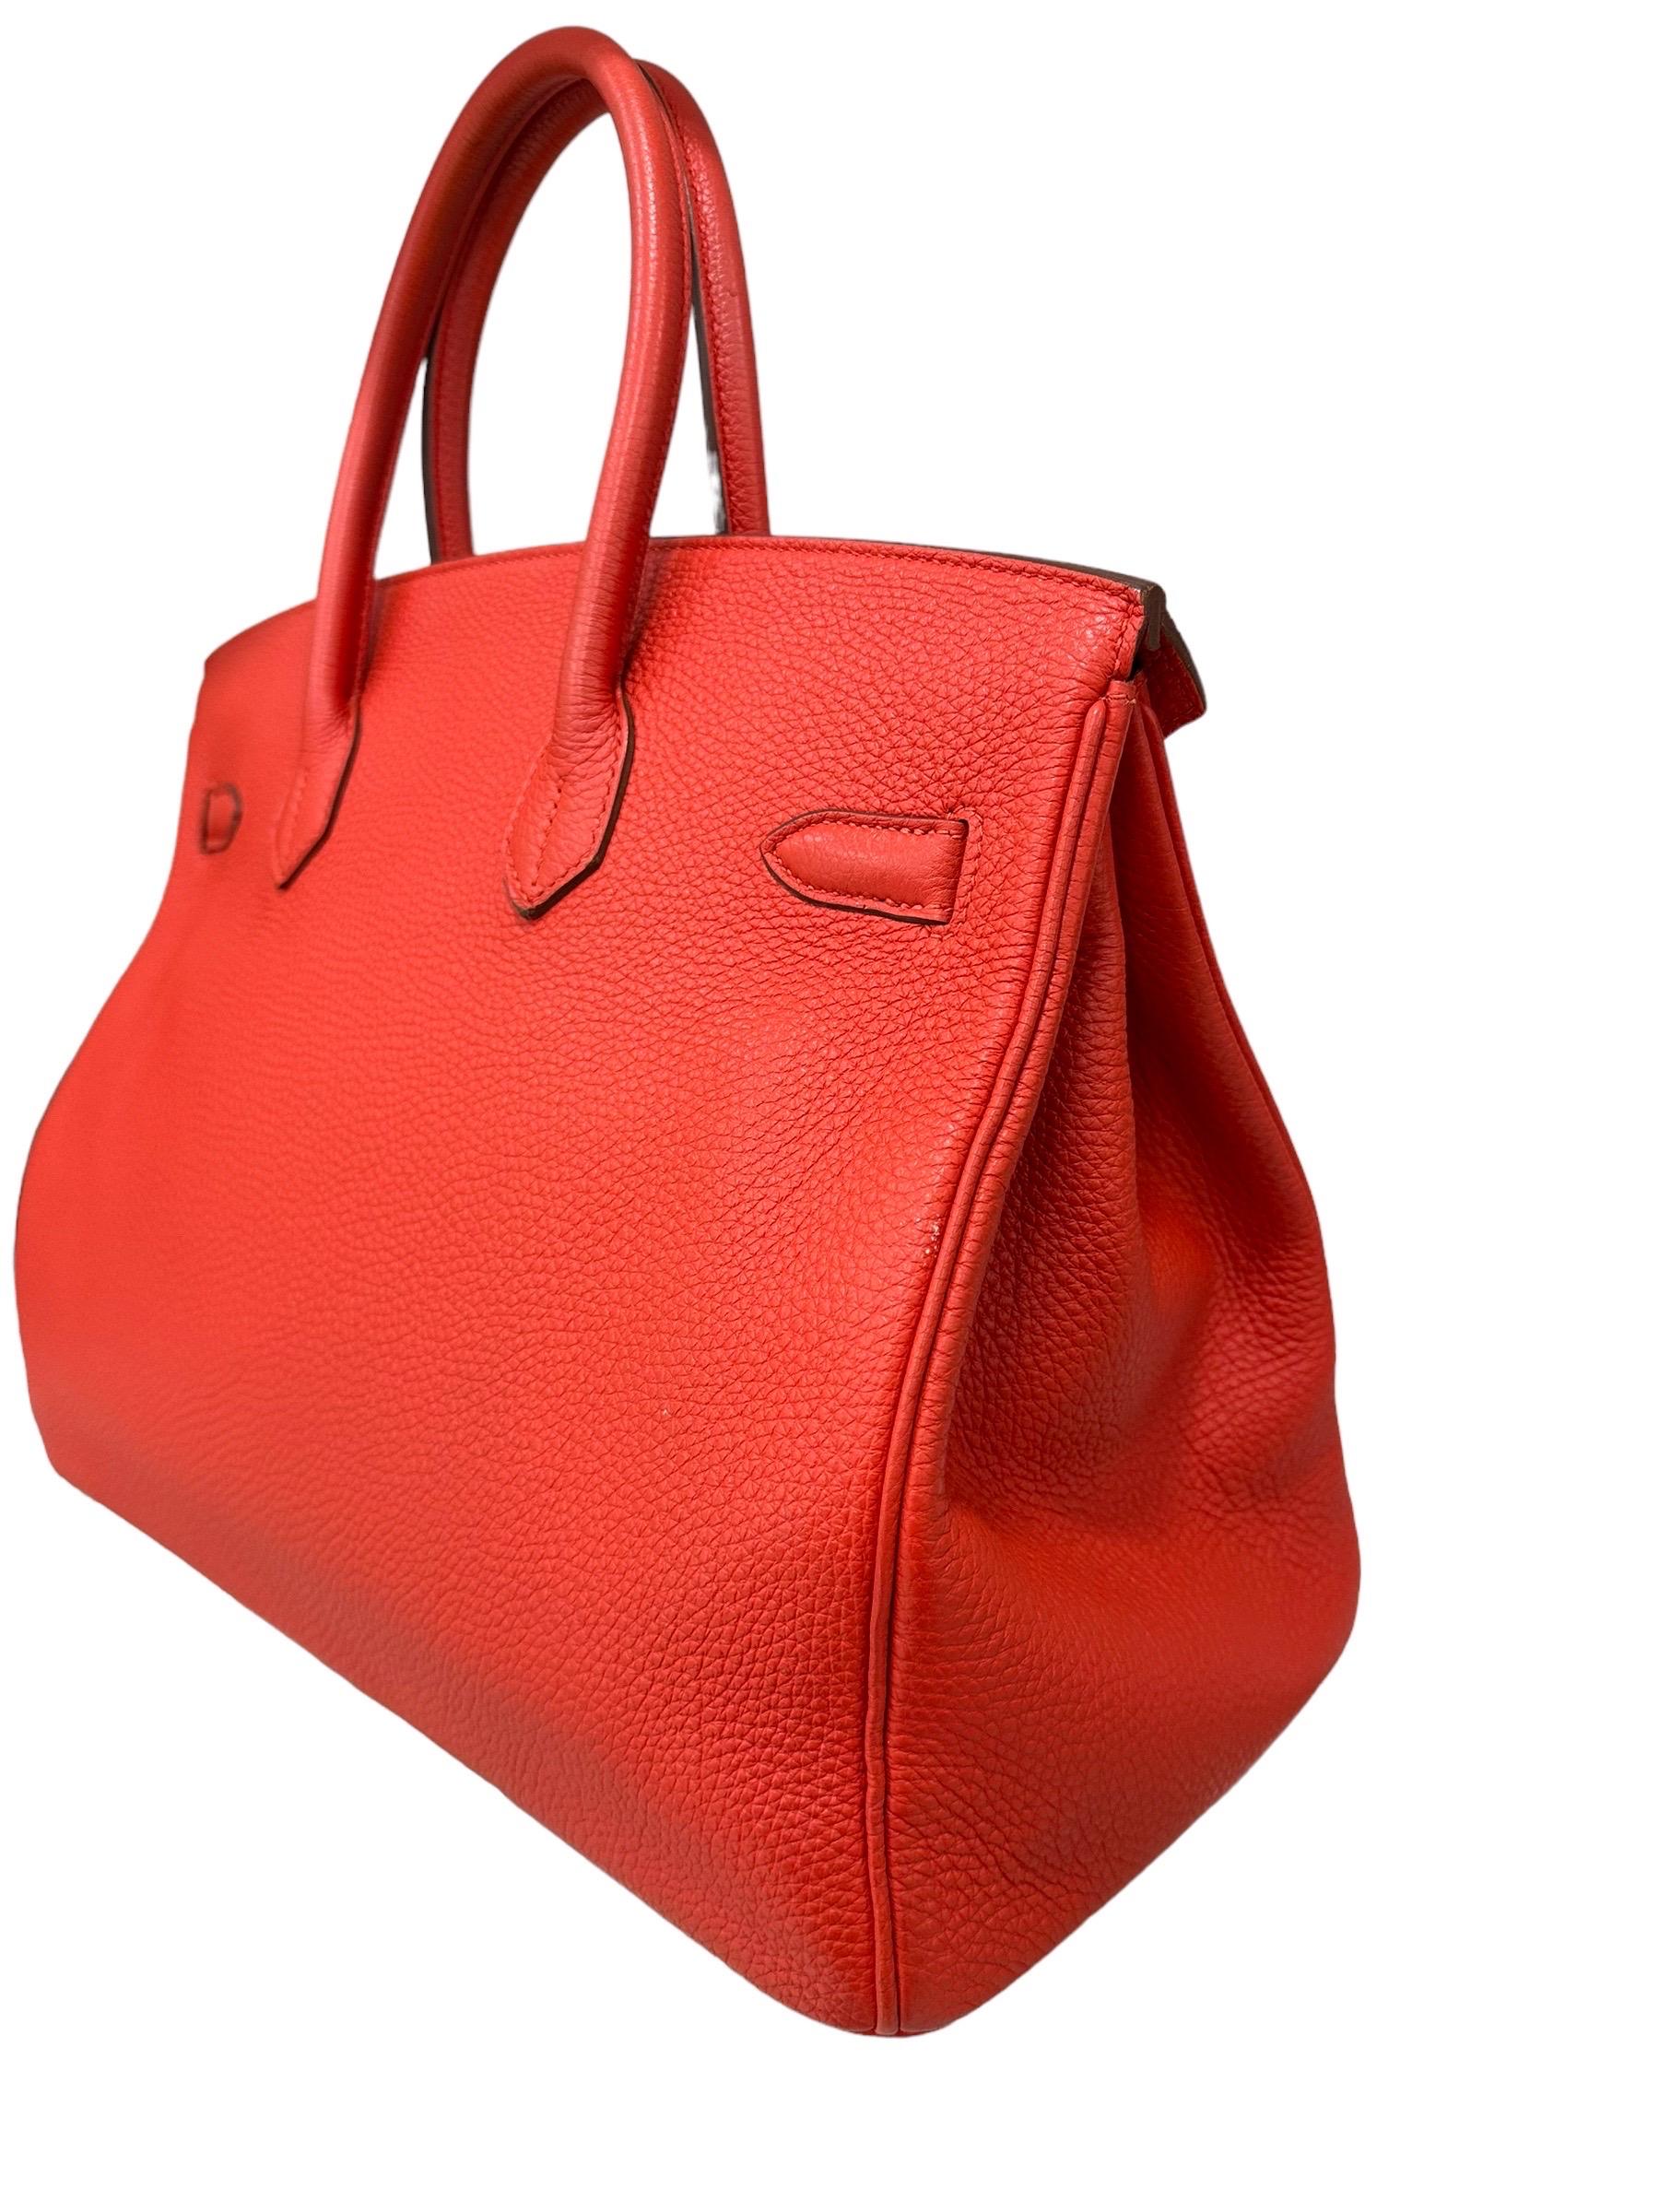 2011 Hermès Birkin 35 Togo Leather Rouge Capucine Top Handle Bag en vente 5